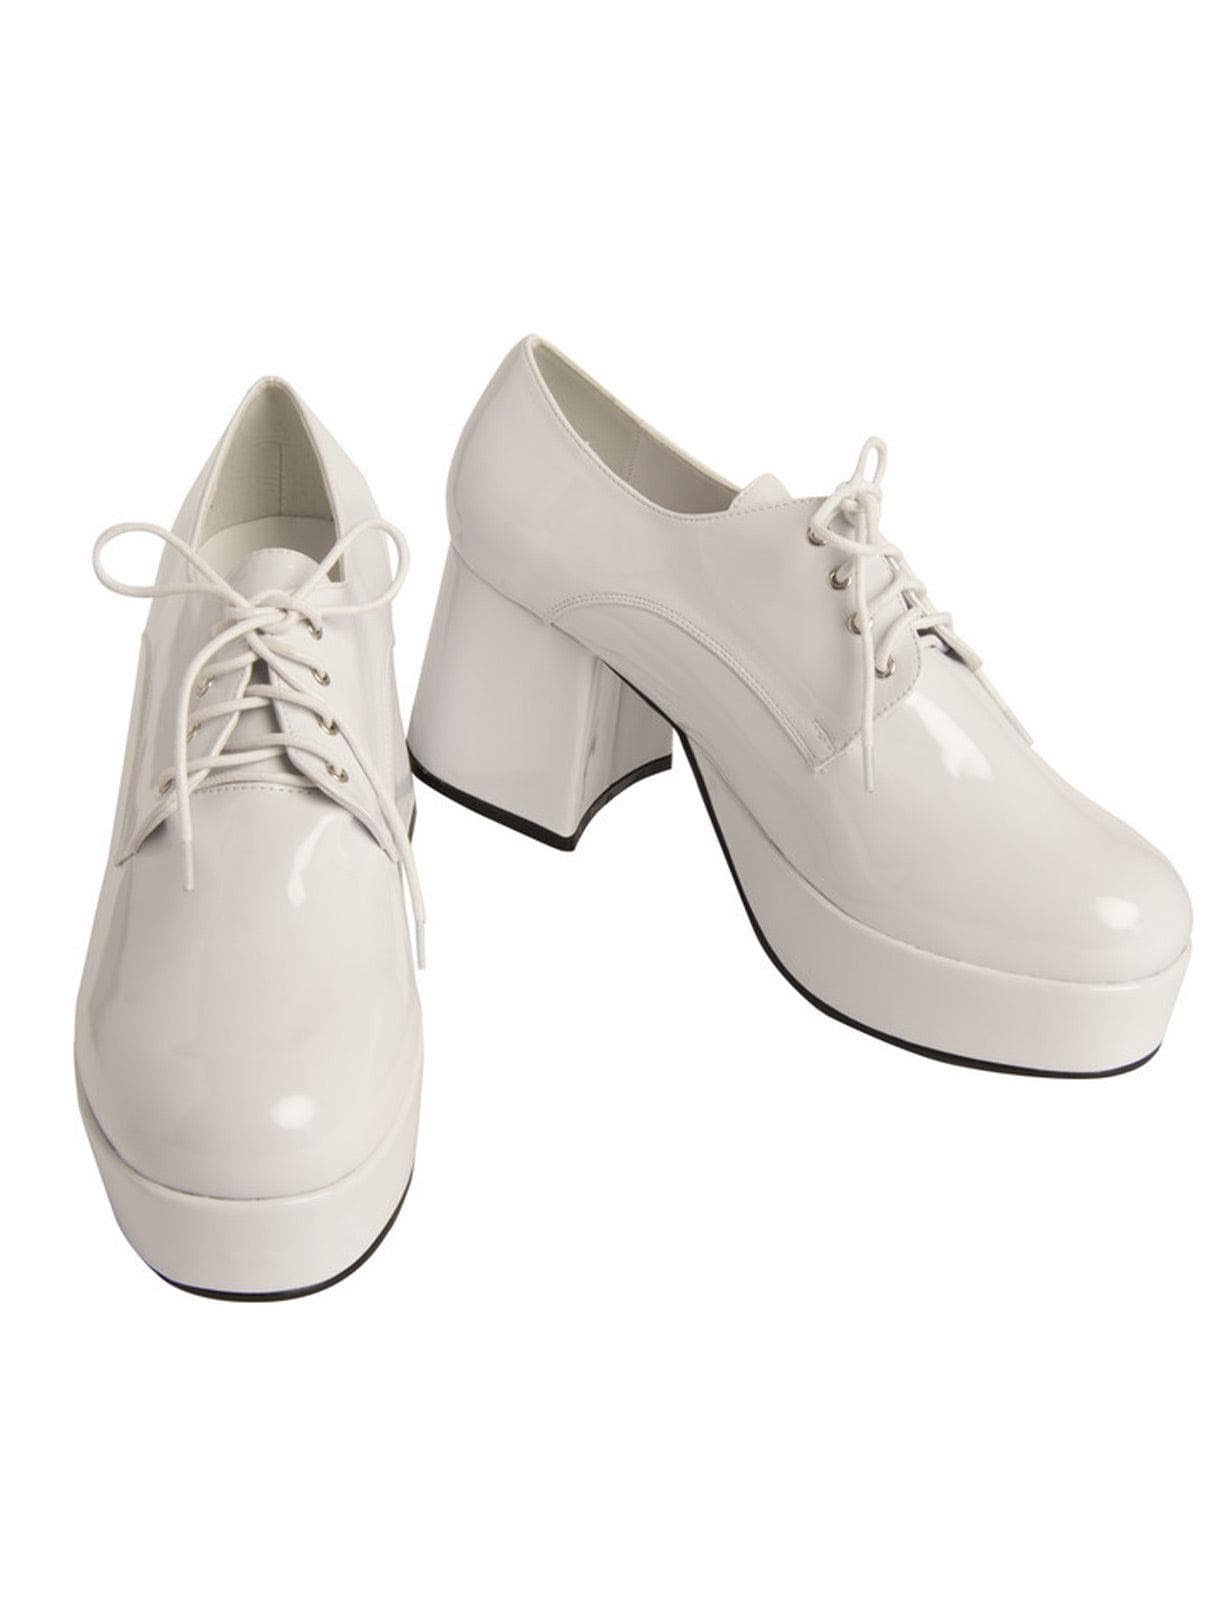 Adult White 70's Platform Heeled Shoes - costumes.com